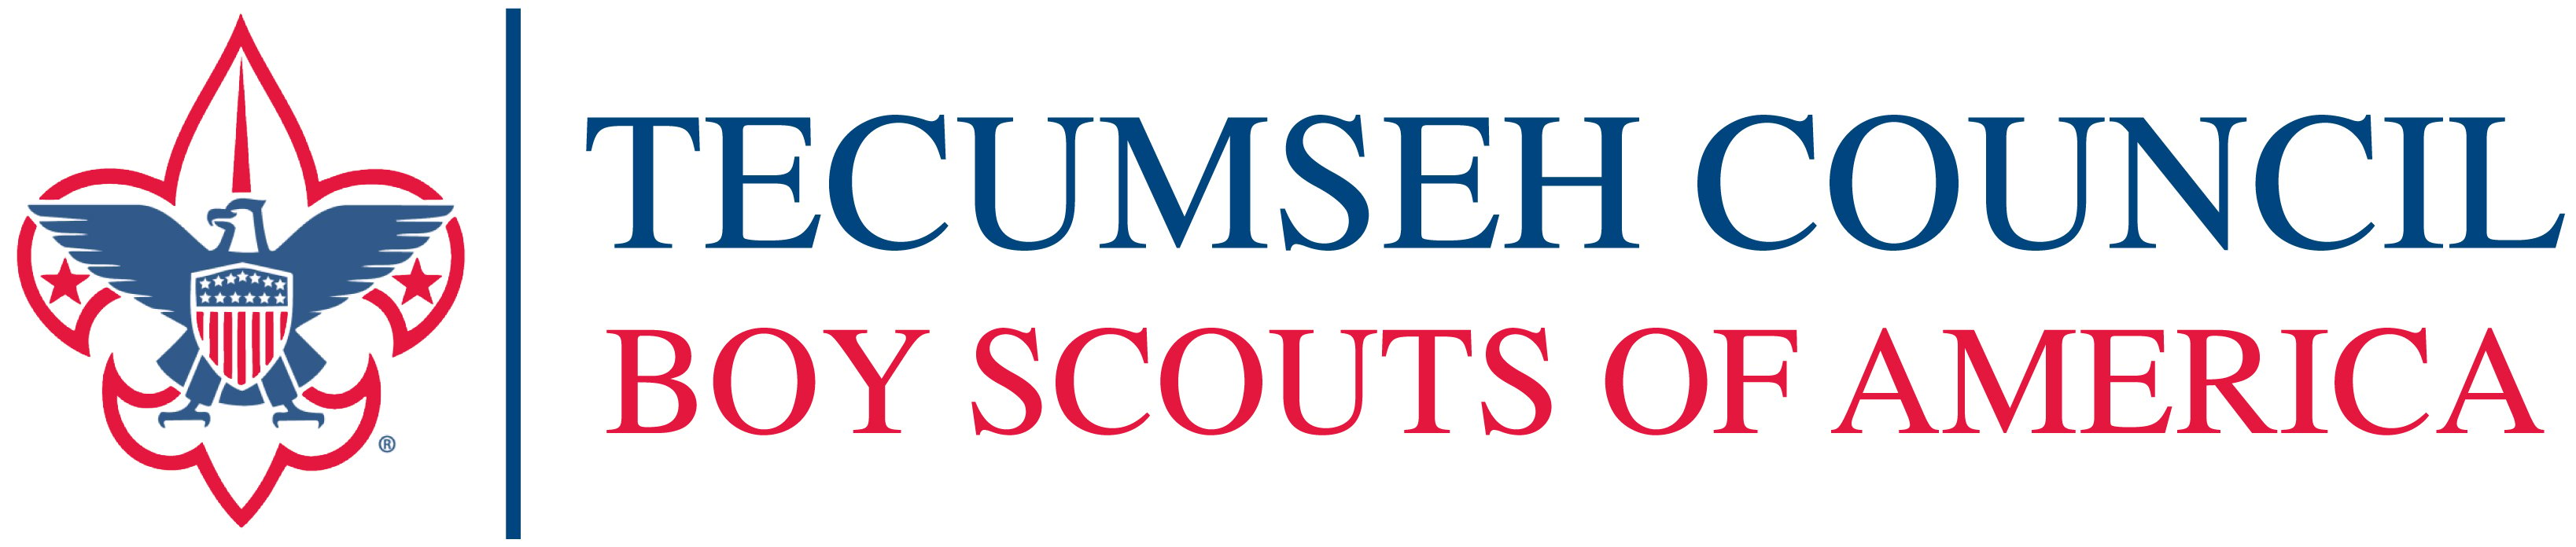 Boy Scouts Of America Tecumseh Council 439 logo